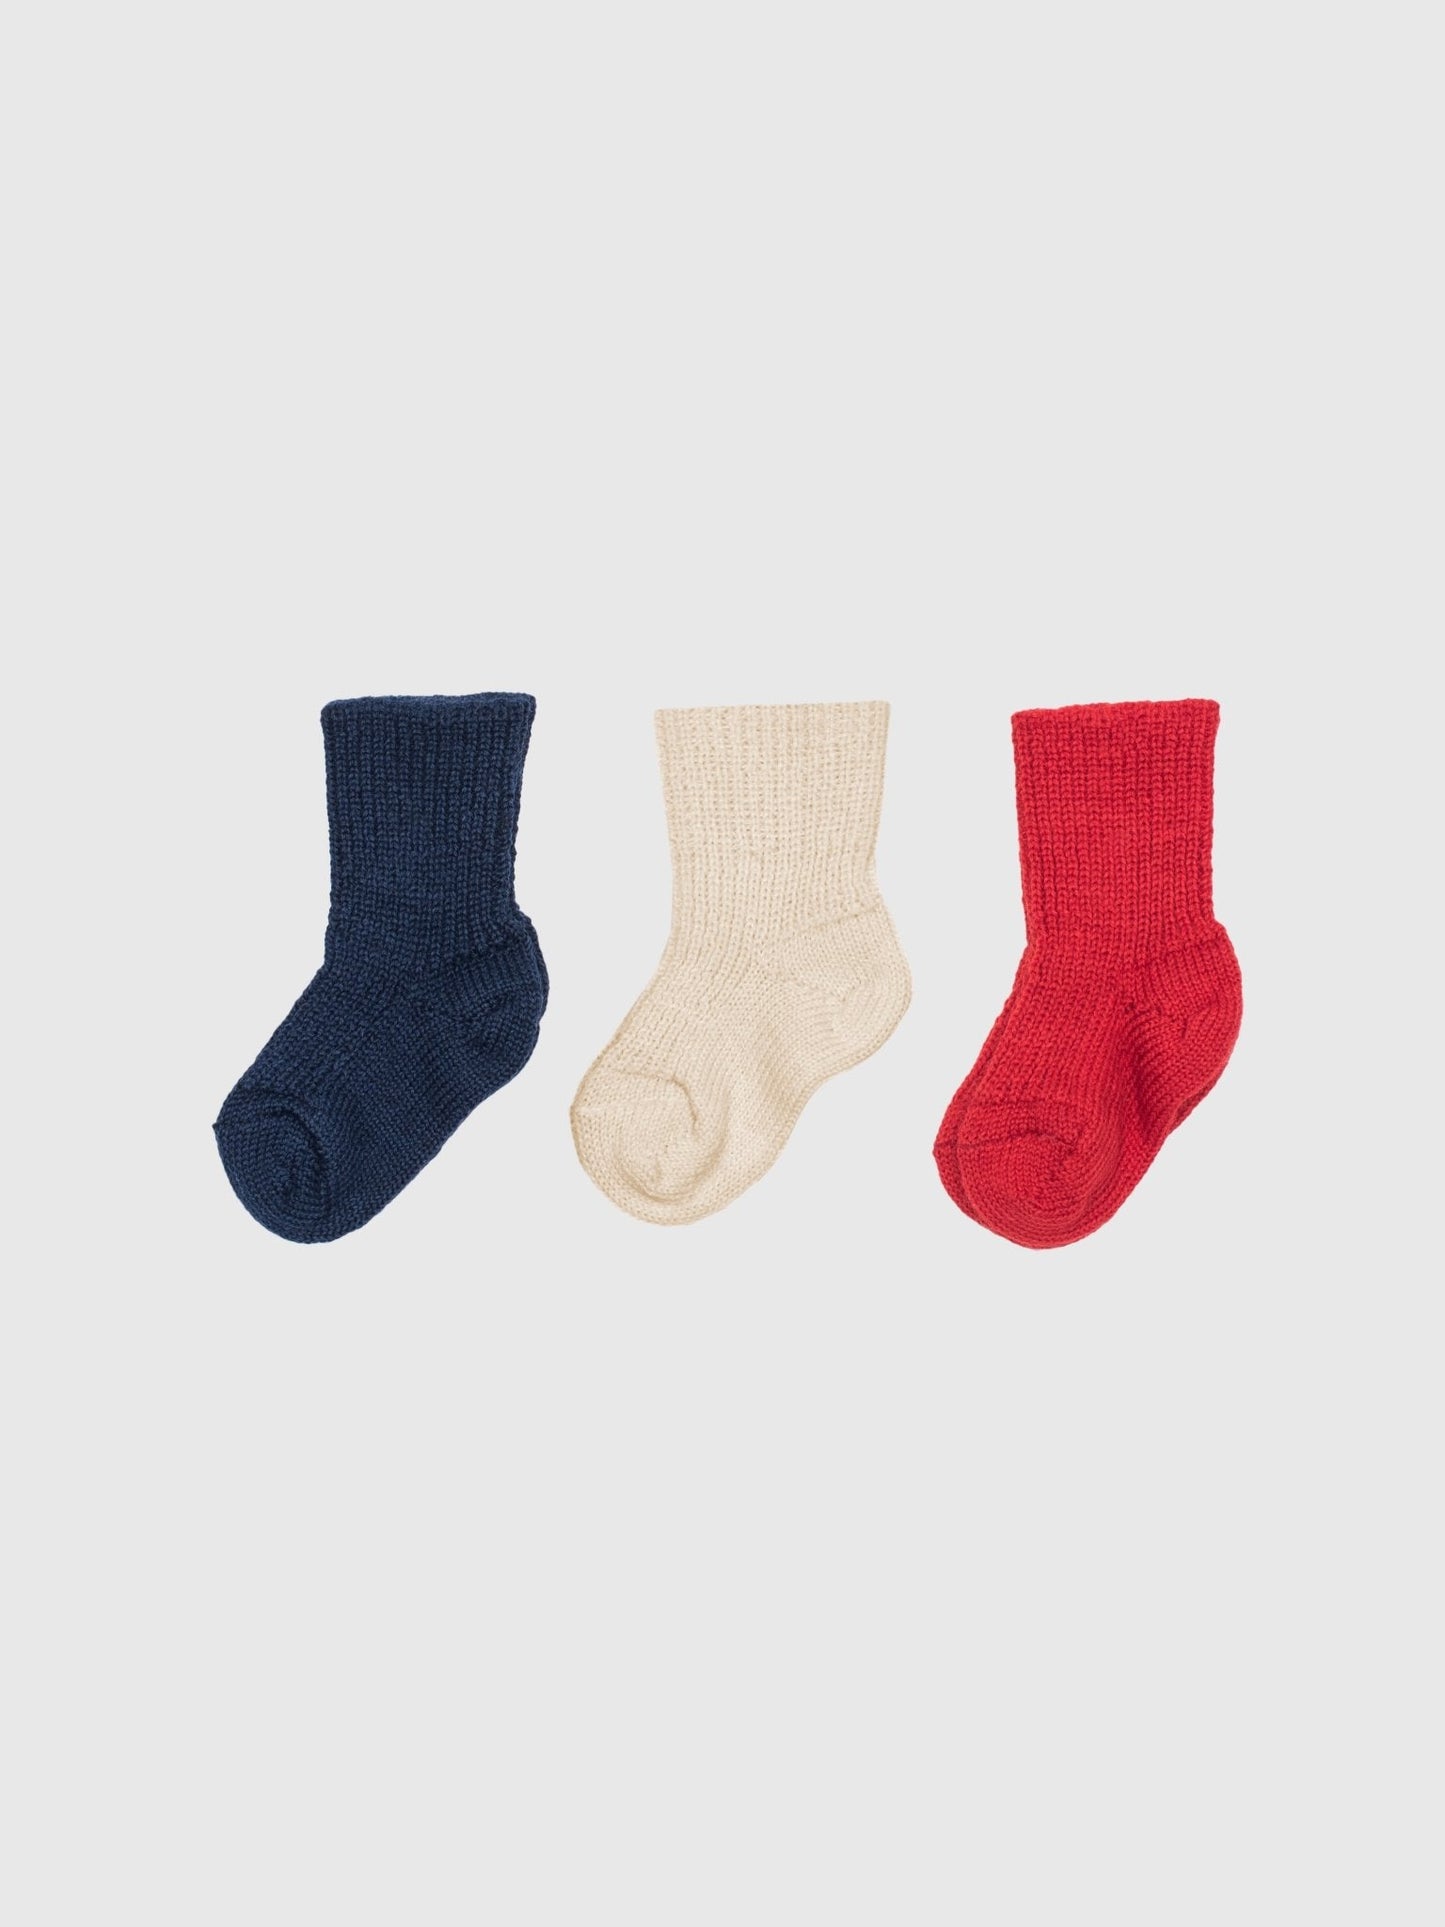 organic merino wool socks - red, navy and natural - LILA.US